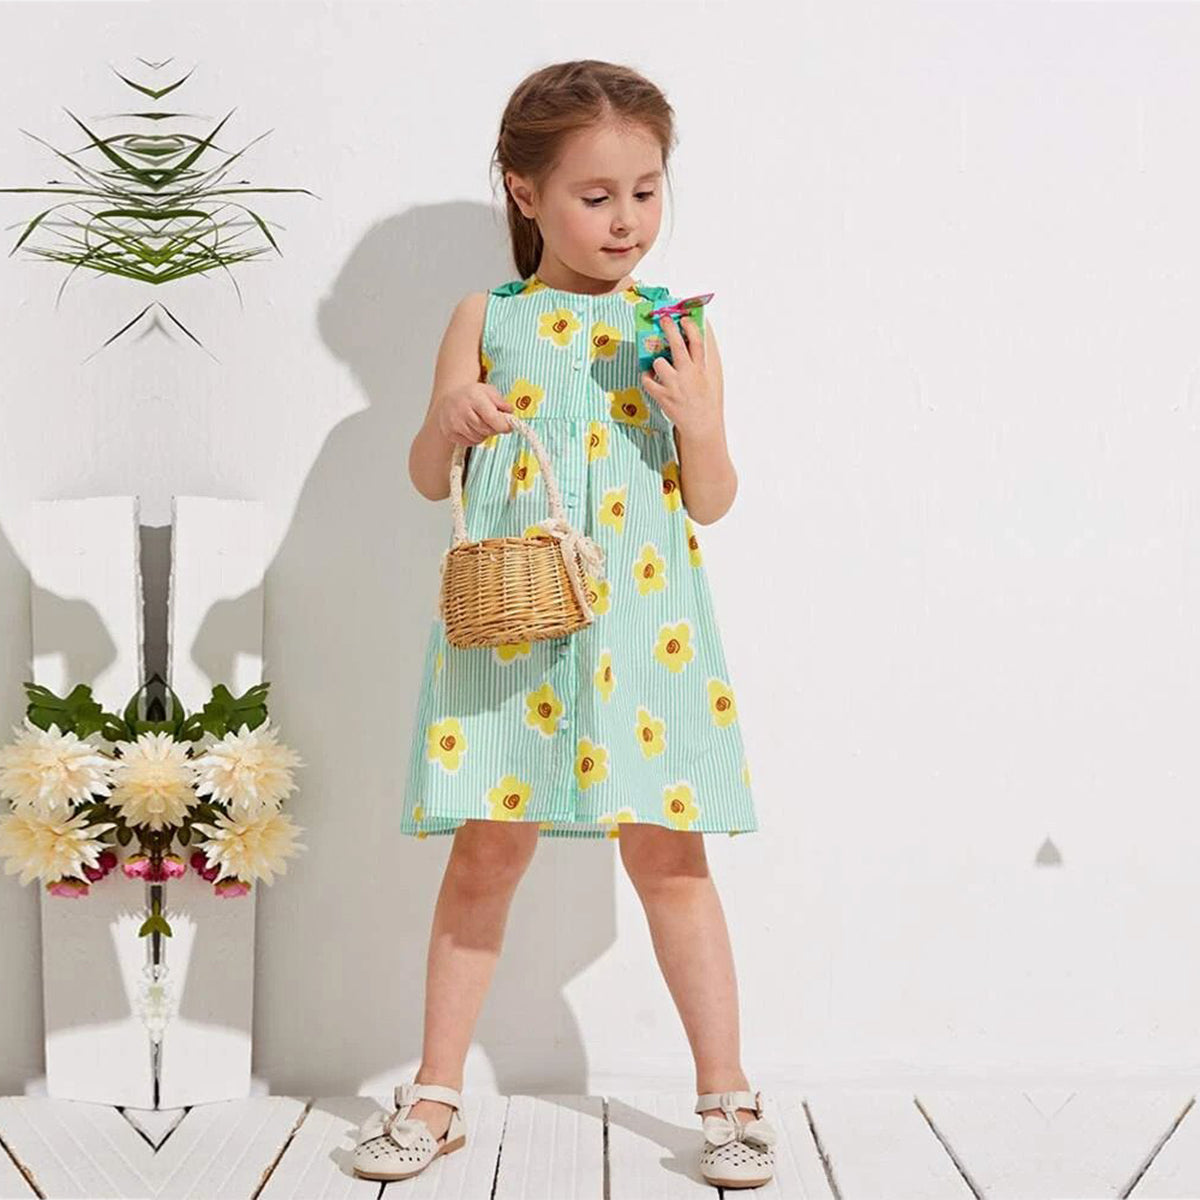 BabyGirl's Unique Designer Heart & Light Green Floral Tunic Dress (Combo Pack Of 2) for Baby Girls.